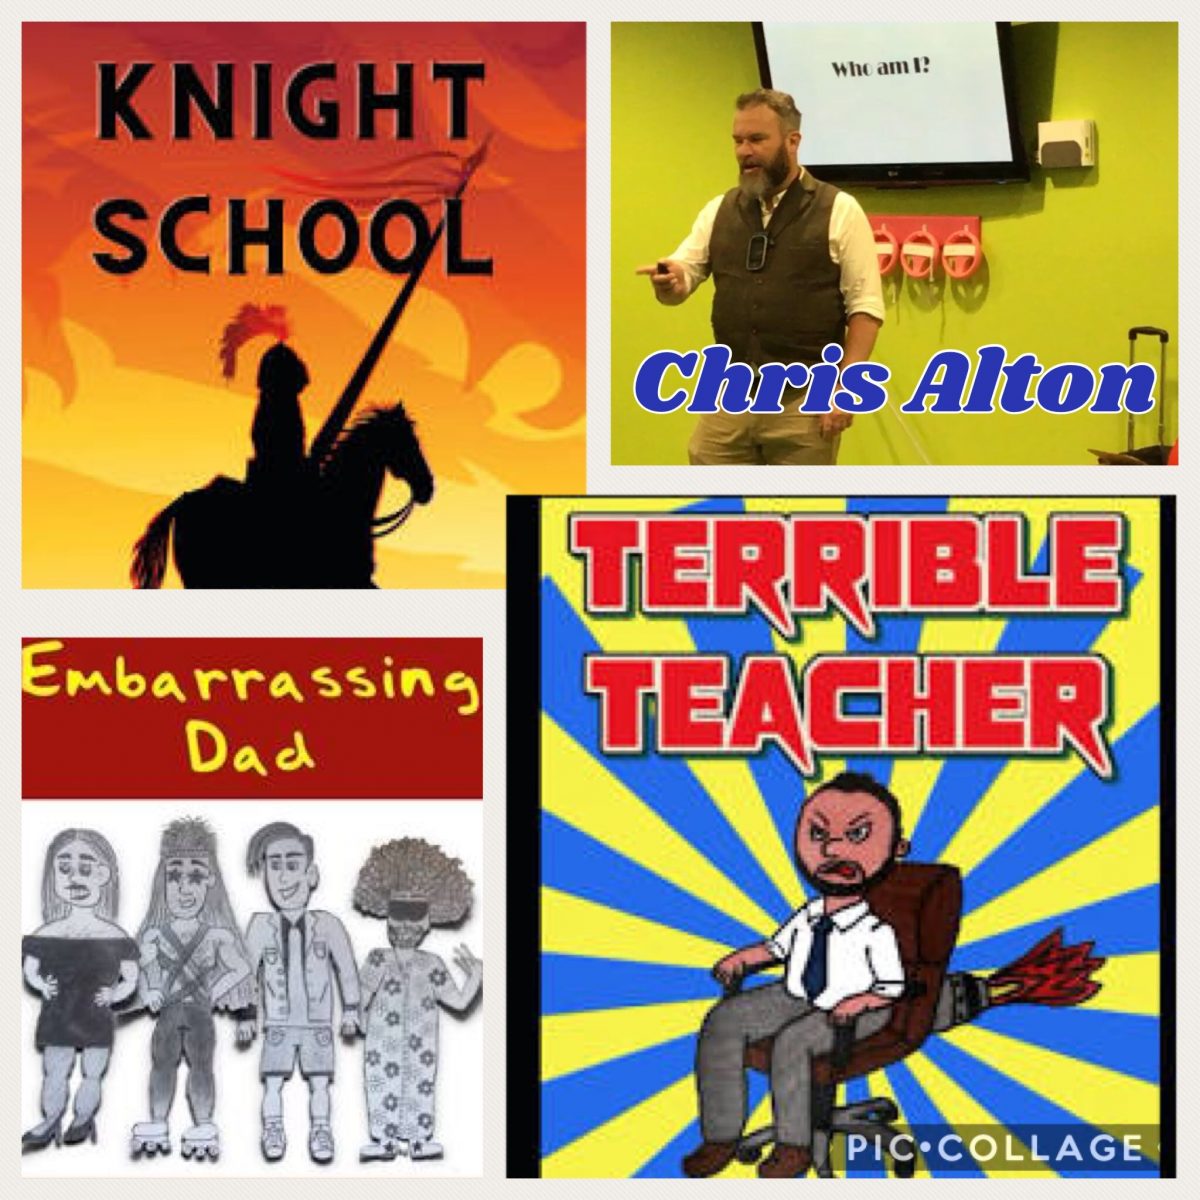 Chris Allton, the author, visits school – Broad Heath Primary School